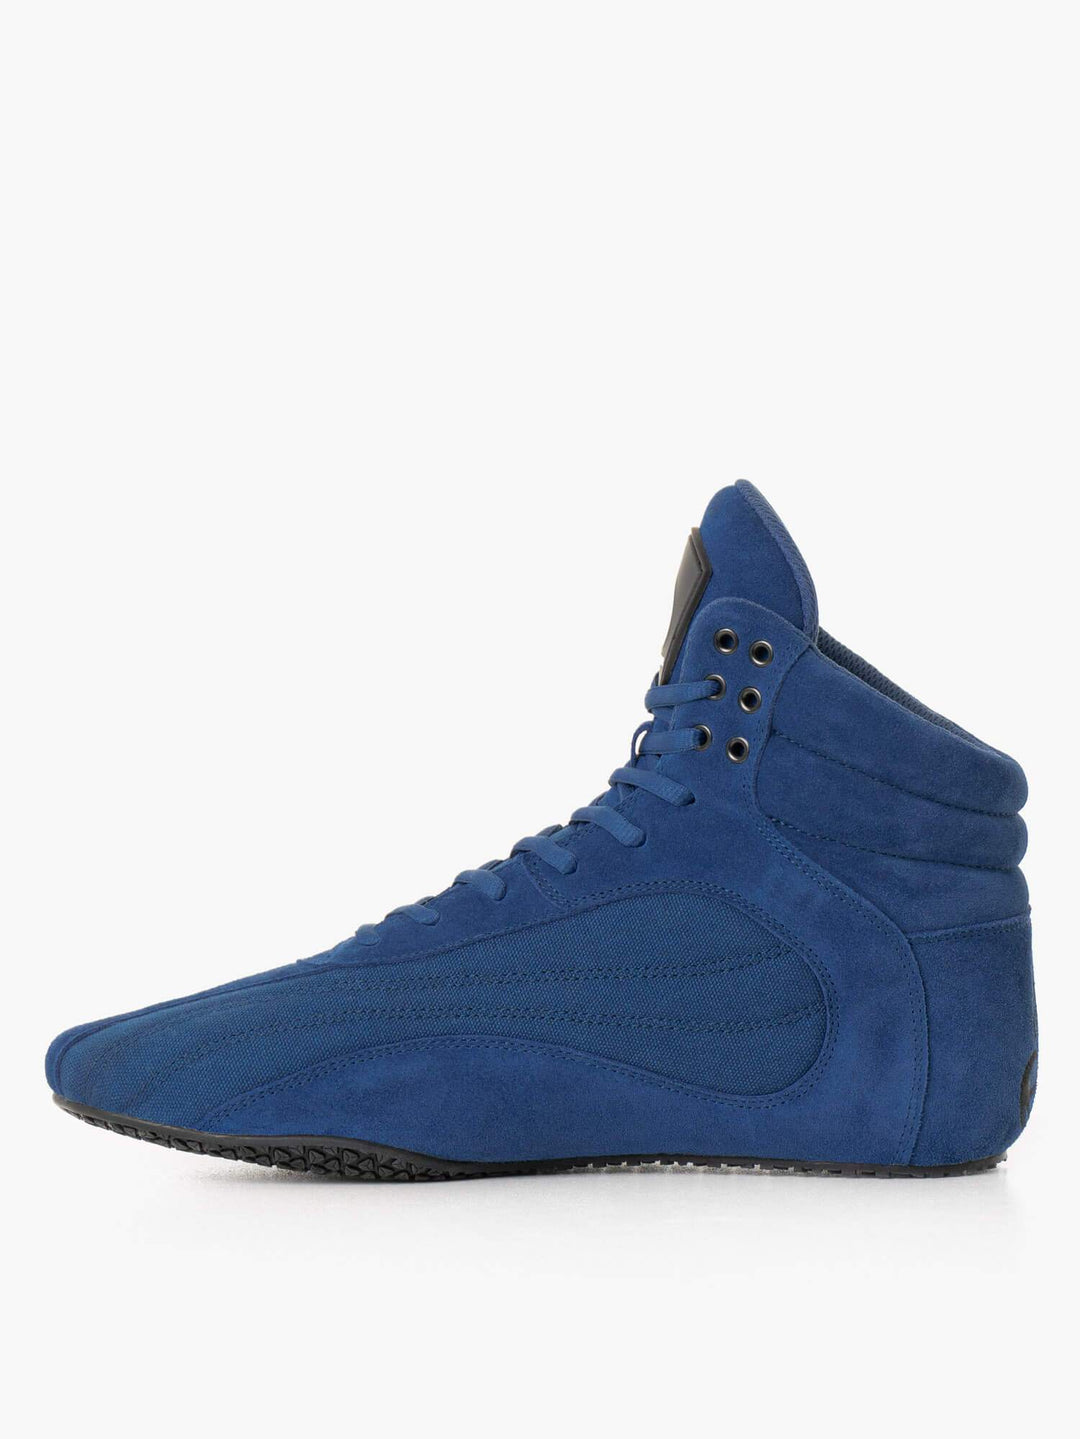 D-Mak Originals - Blue Shoes Ryderwear 